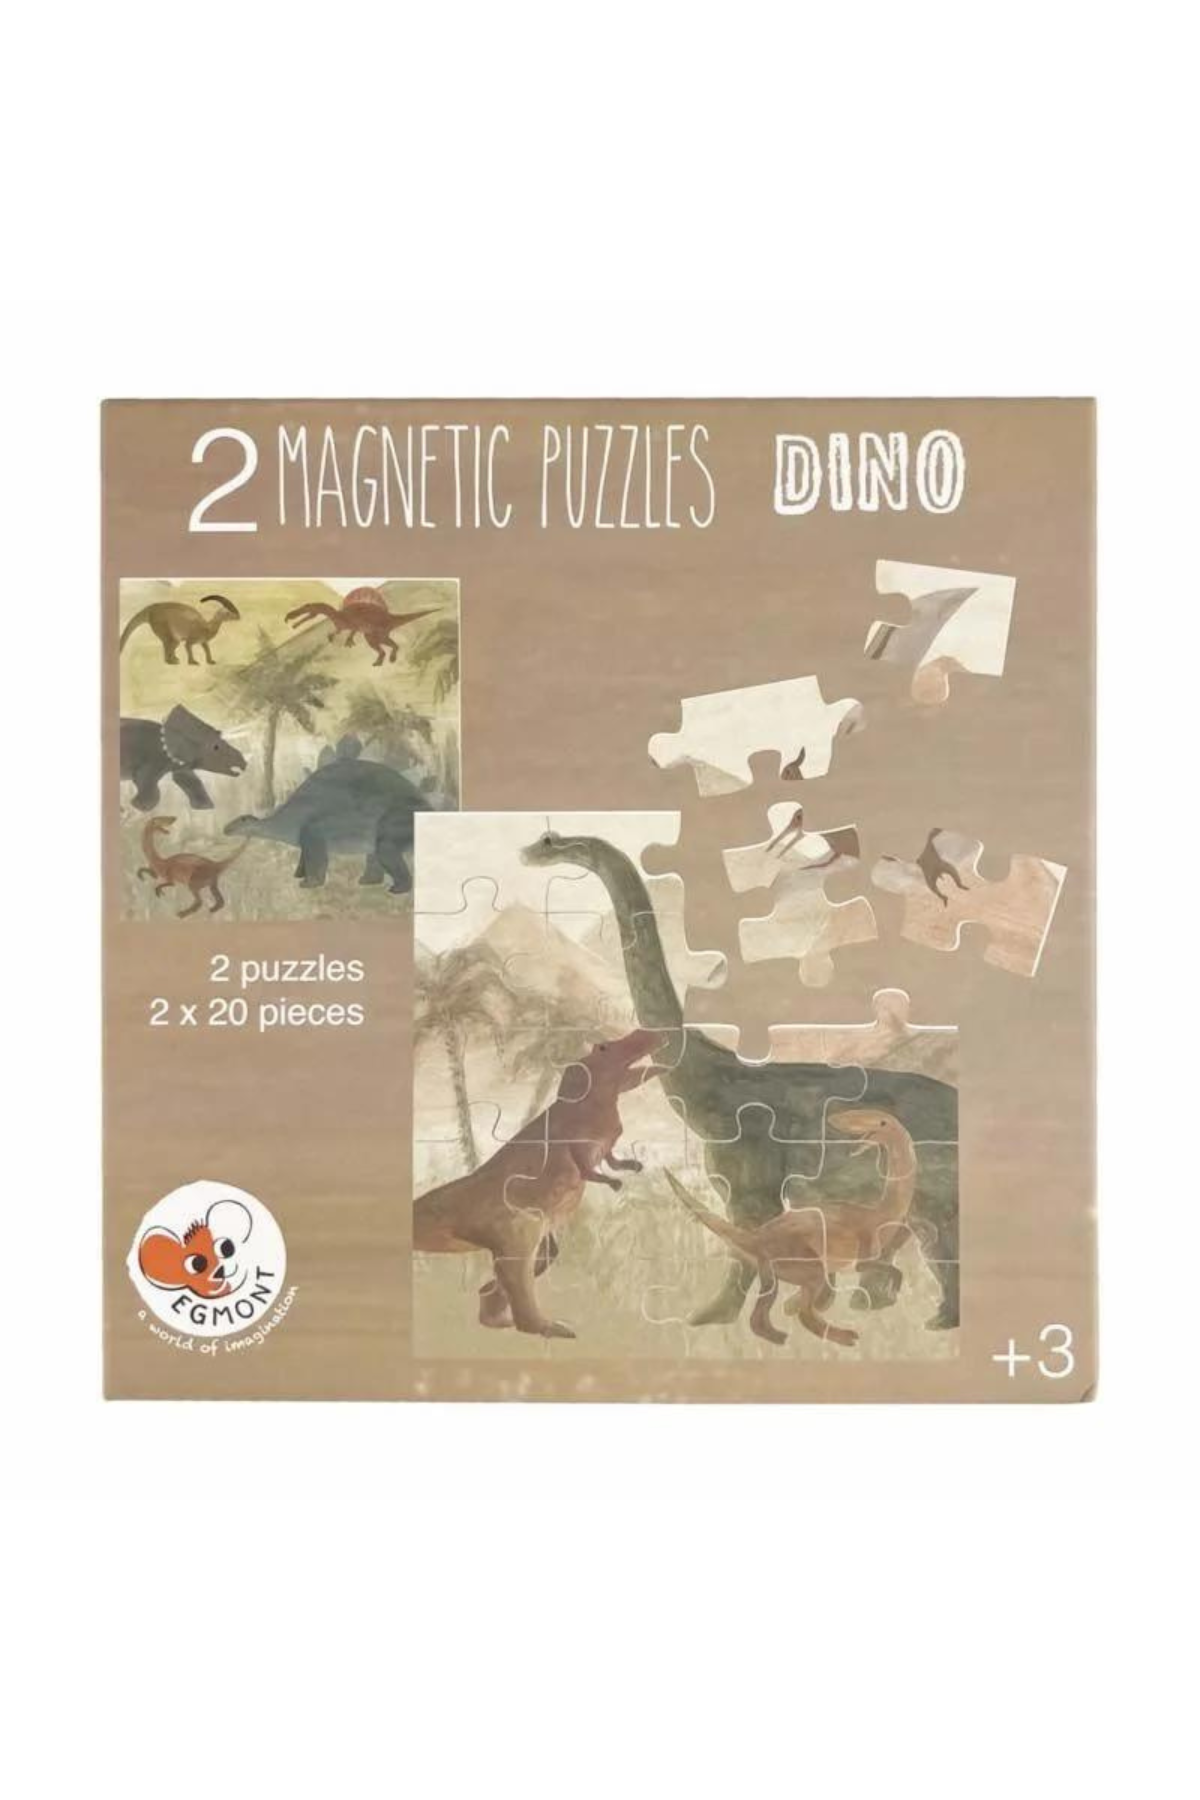 Magnetisches Puzzle: Dino